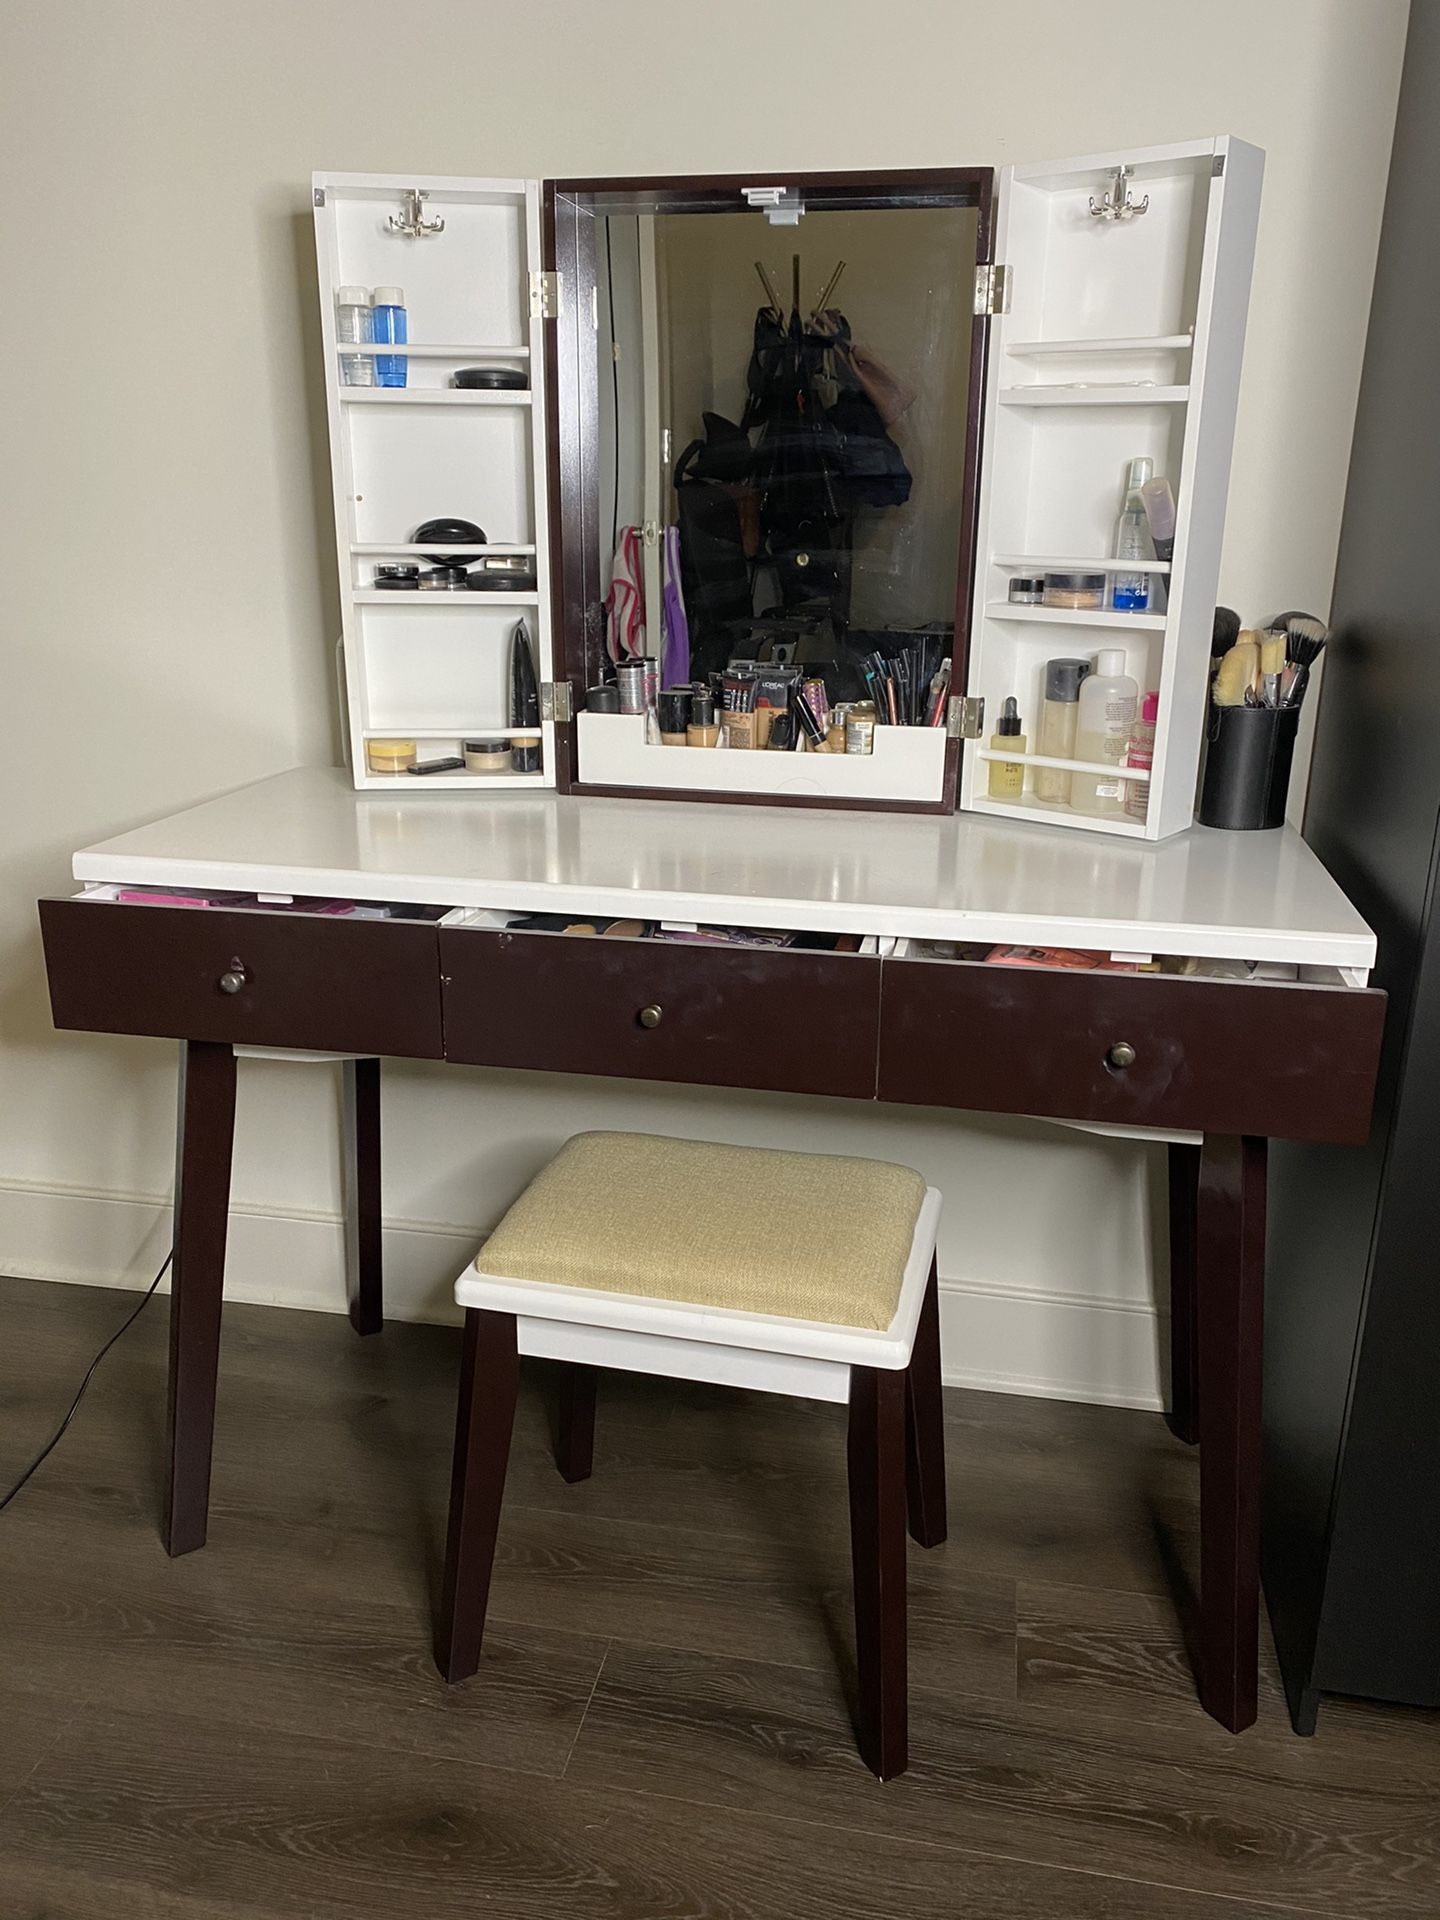 BEWISHOME Vanity Set with Mirror, Cushioned Stool, Storage Shelves, Makeup Organizer, 3 Drawers White Makeup Vanity Desk Dressing Table Price: 90